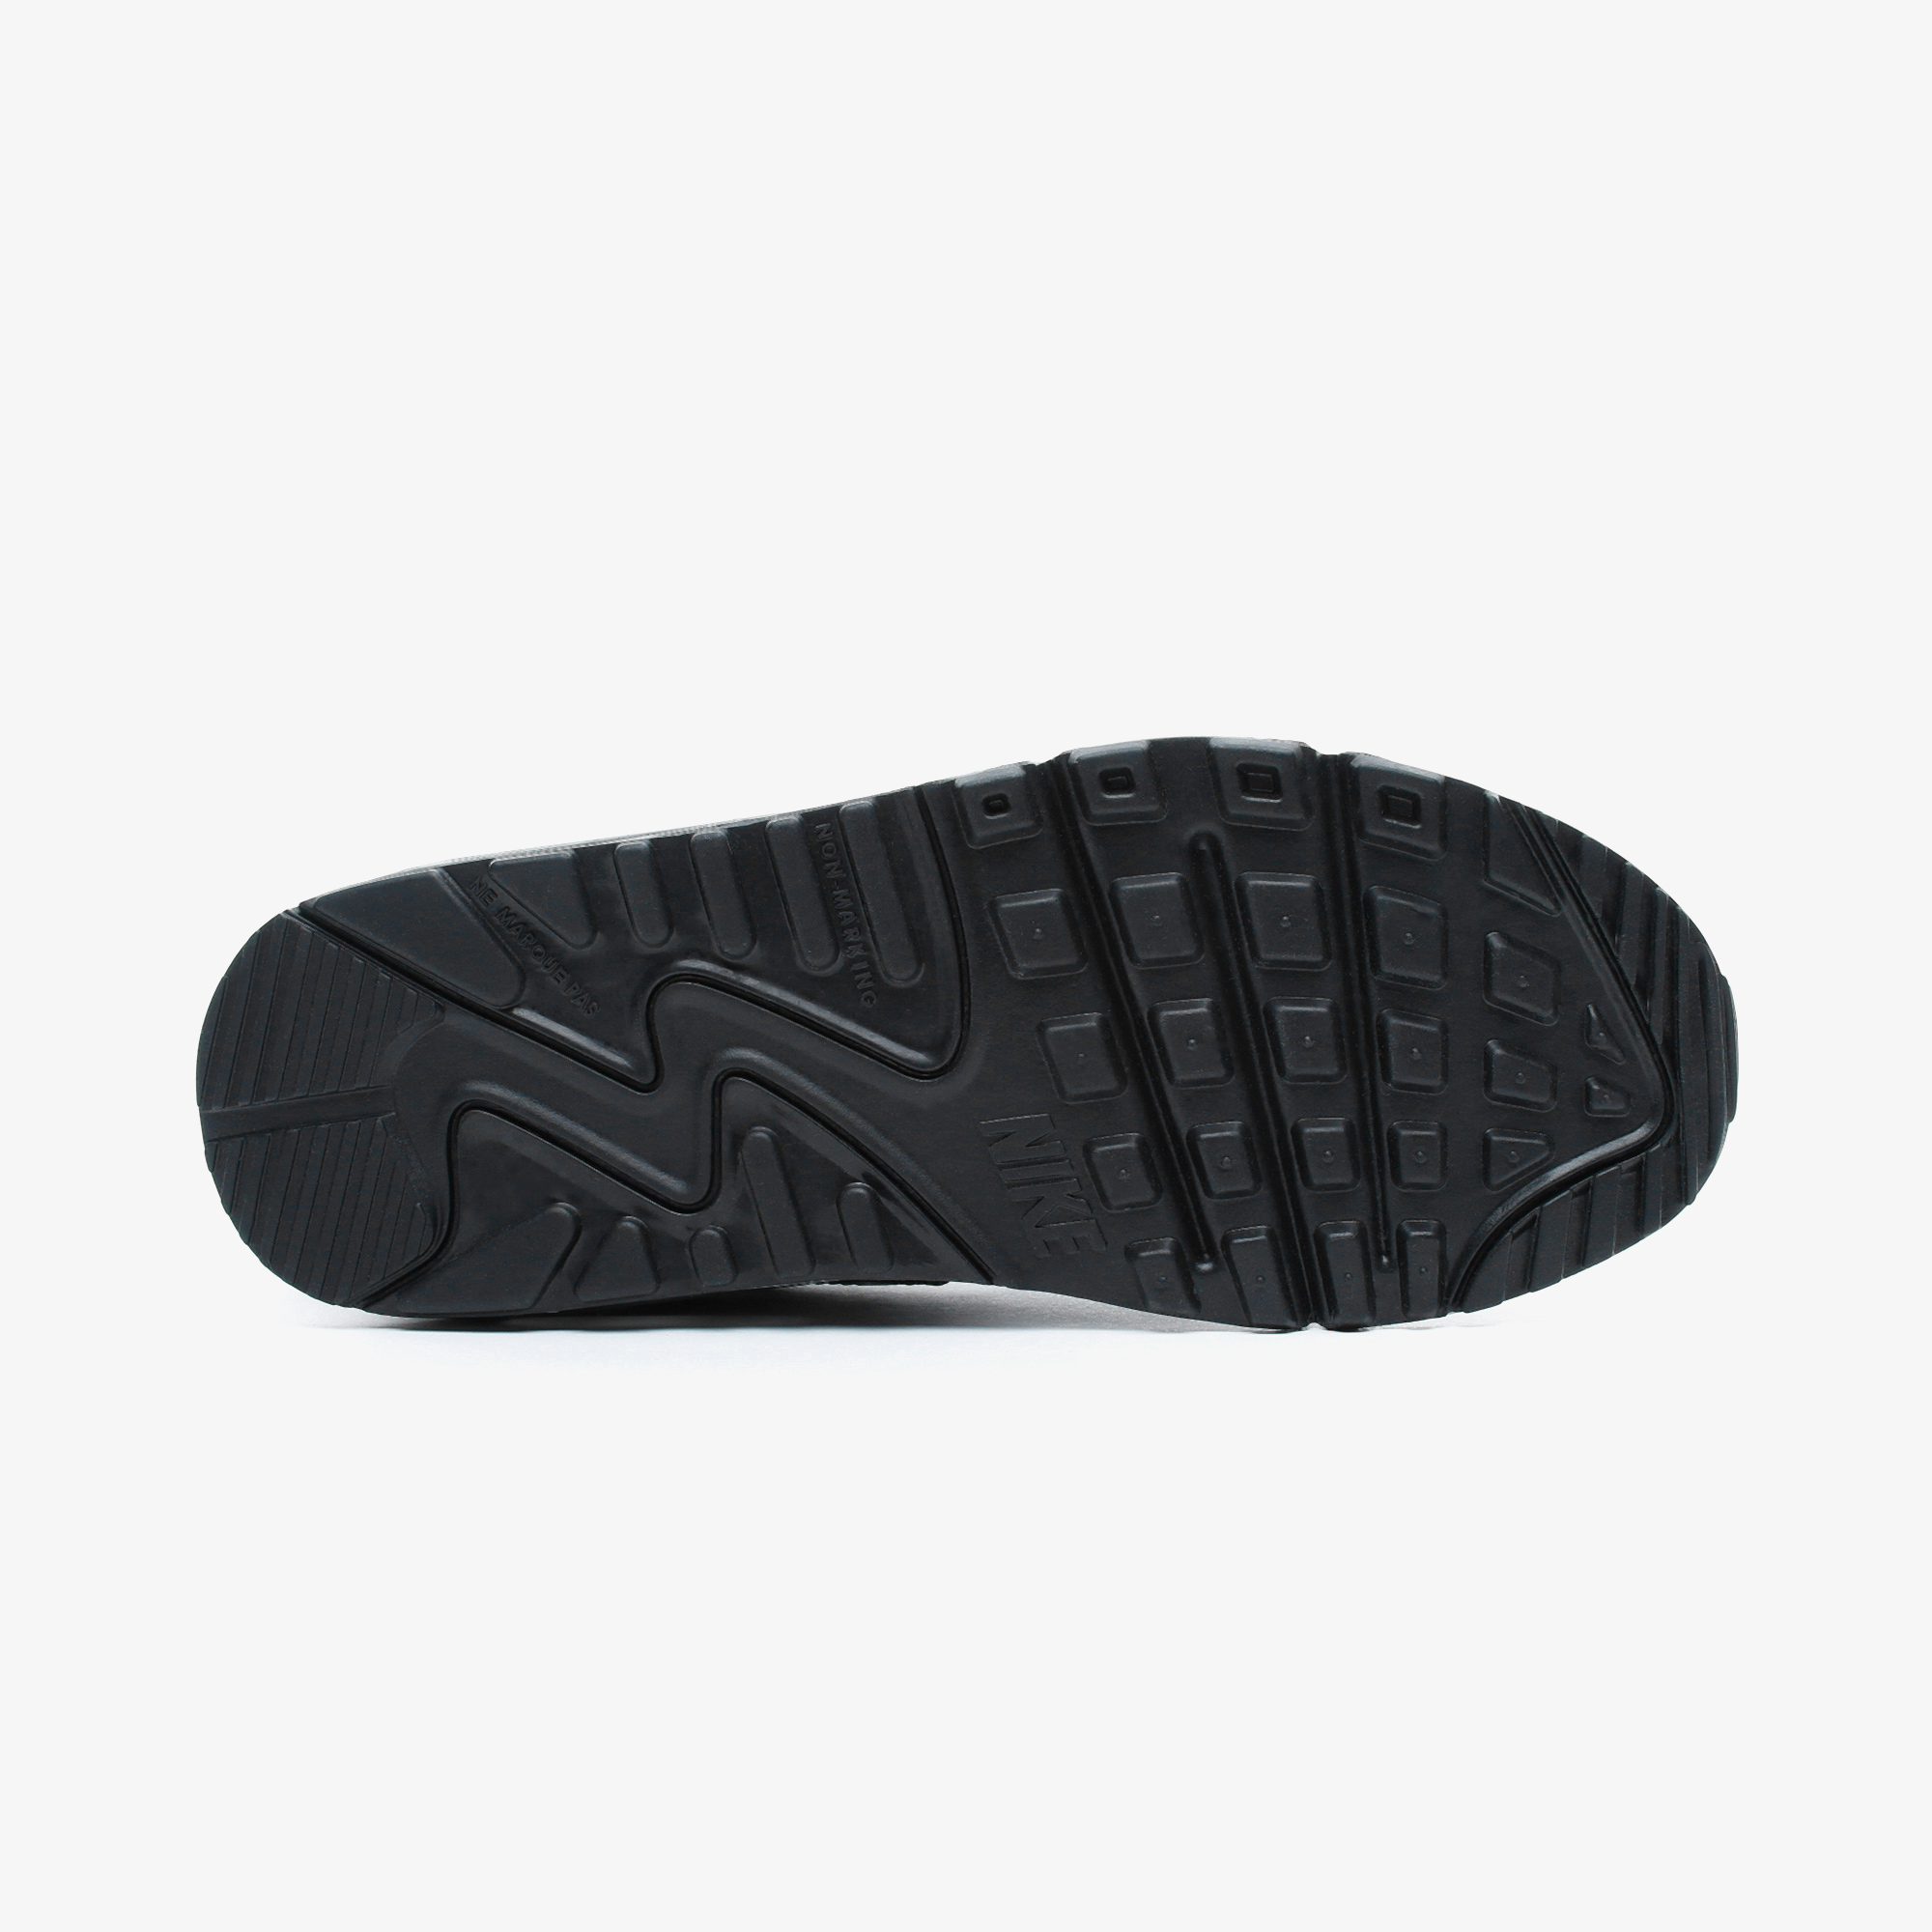 Nike Air Max 90 LTR Kadın Siyah Spor Ayakkabı